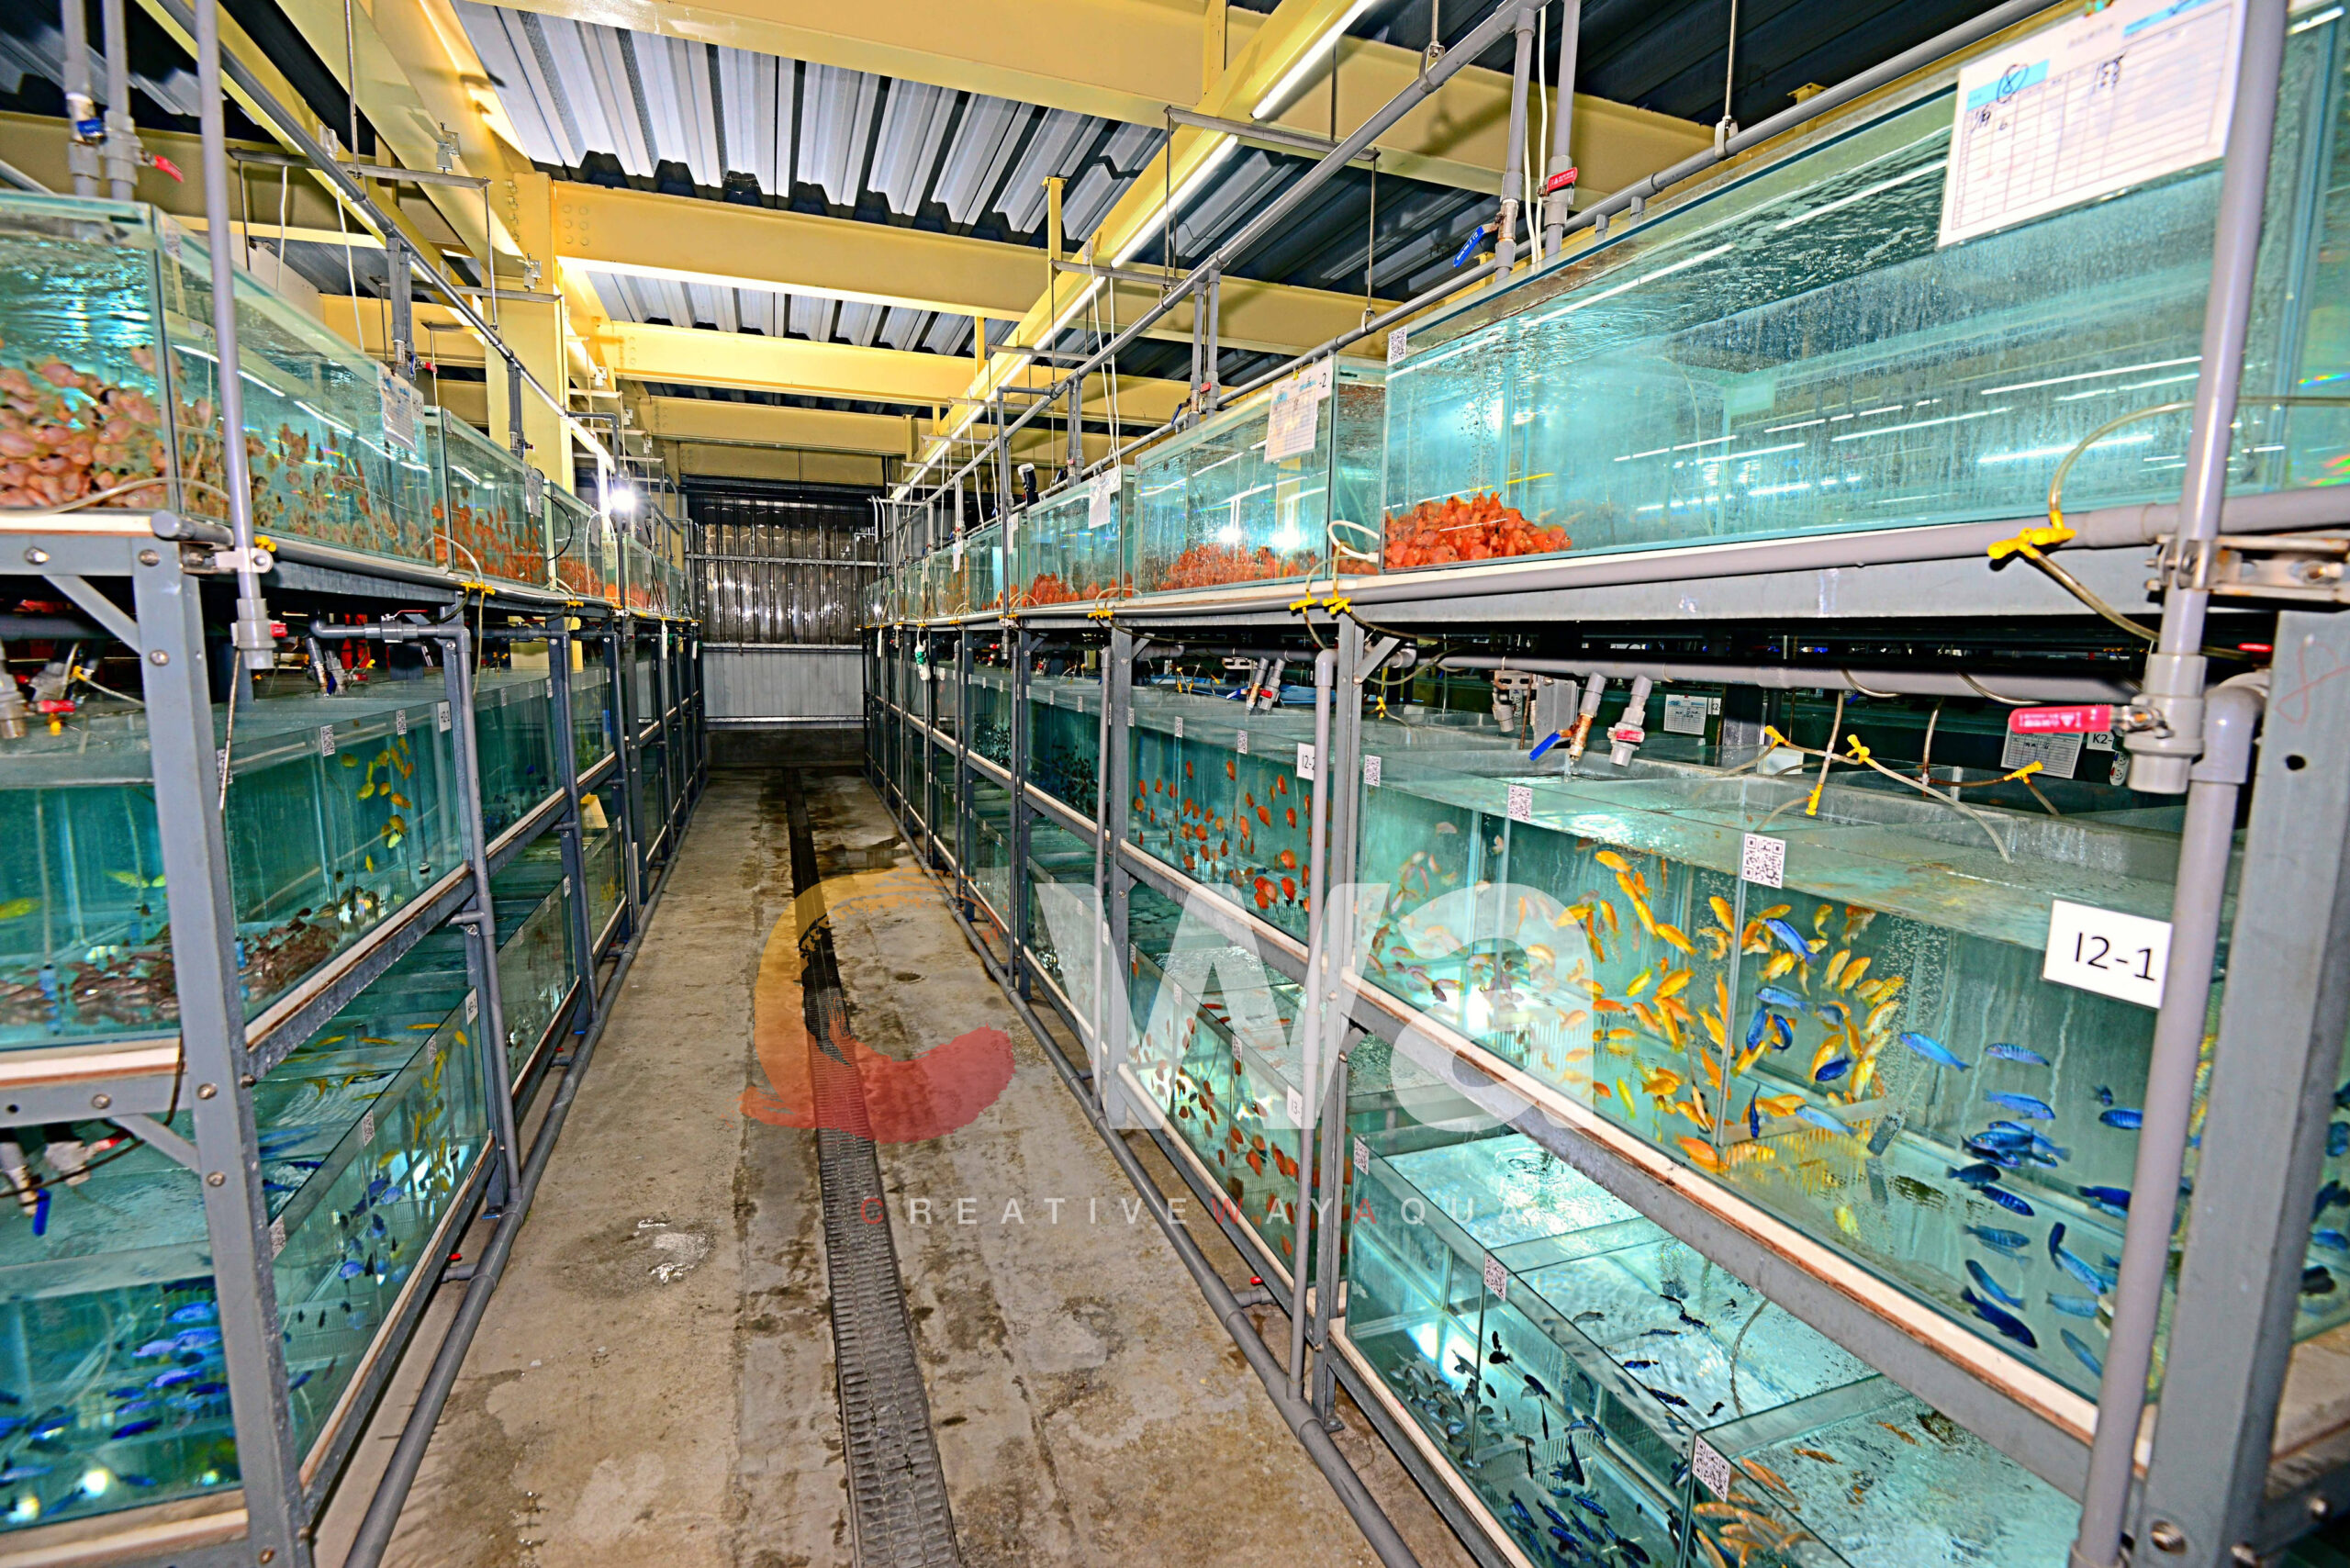 image of fish tanks